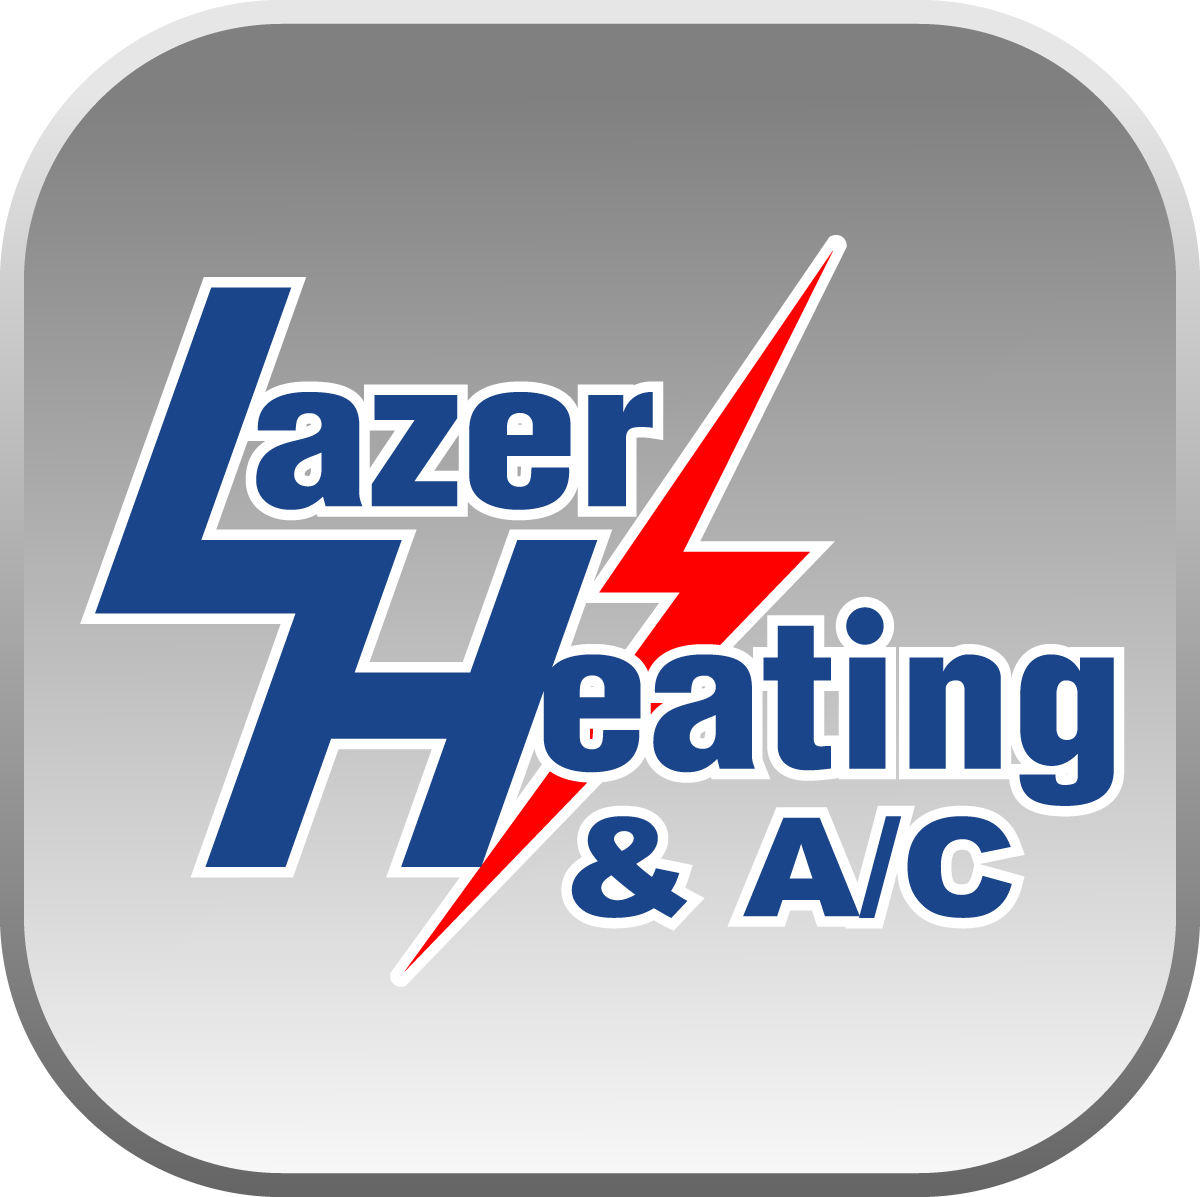 Lazer Heating & A/C